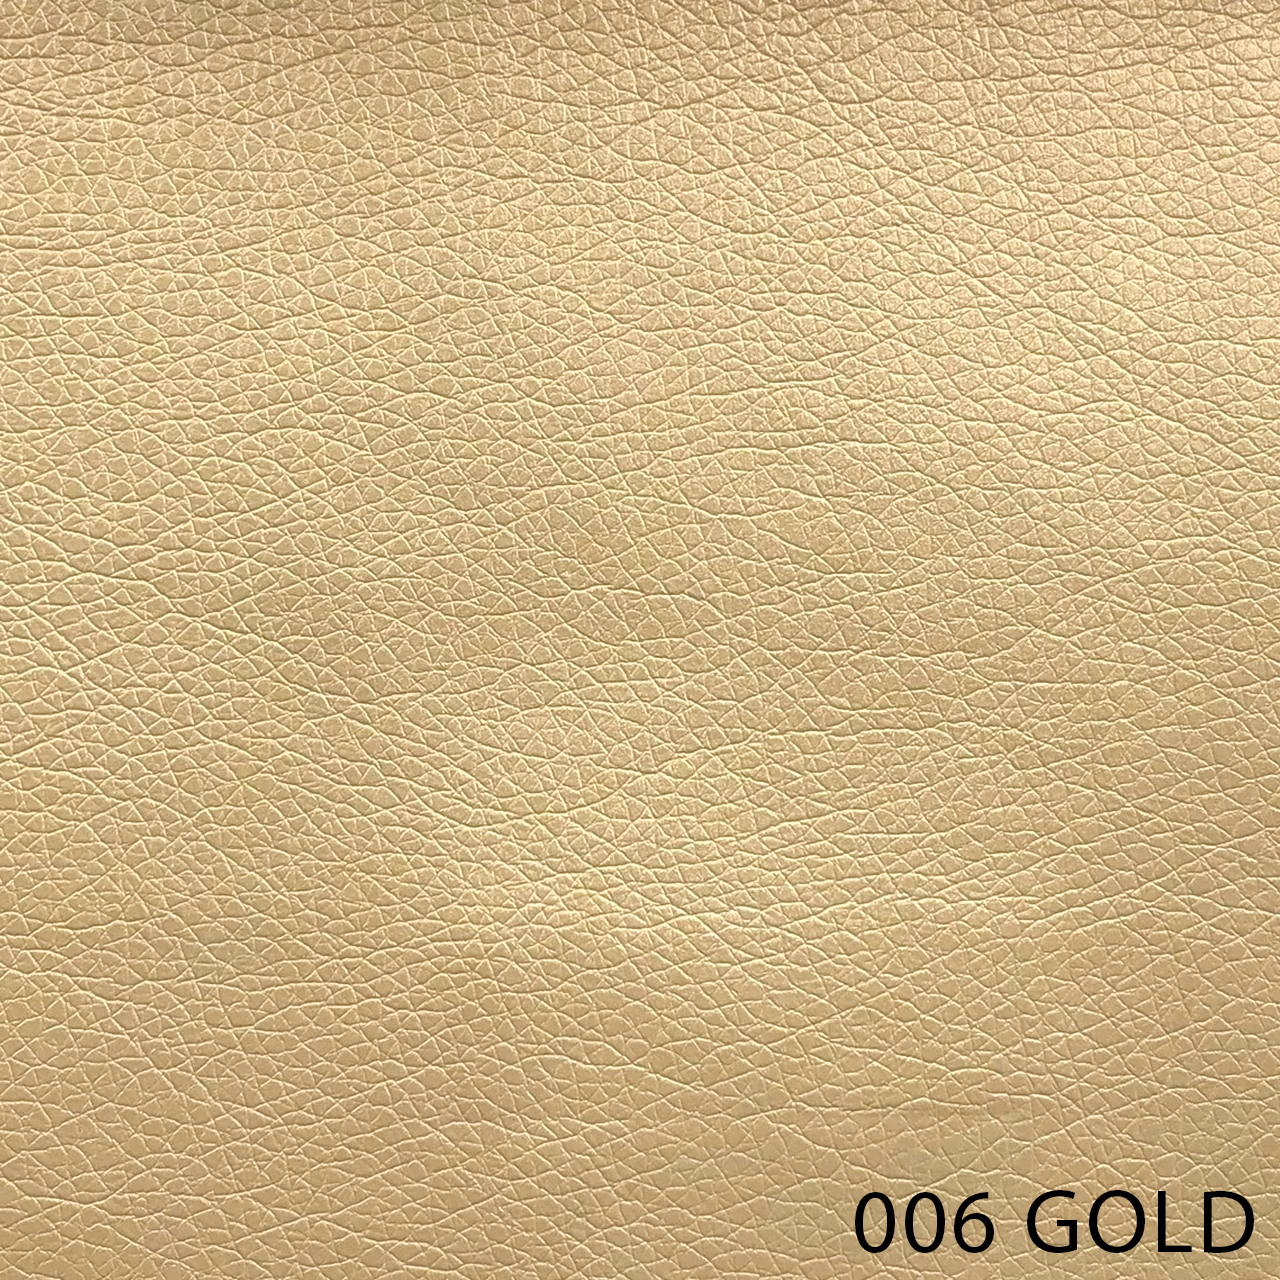 006 GOLD